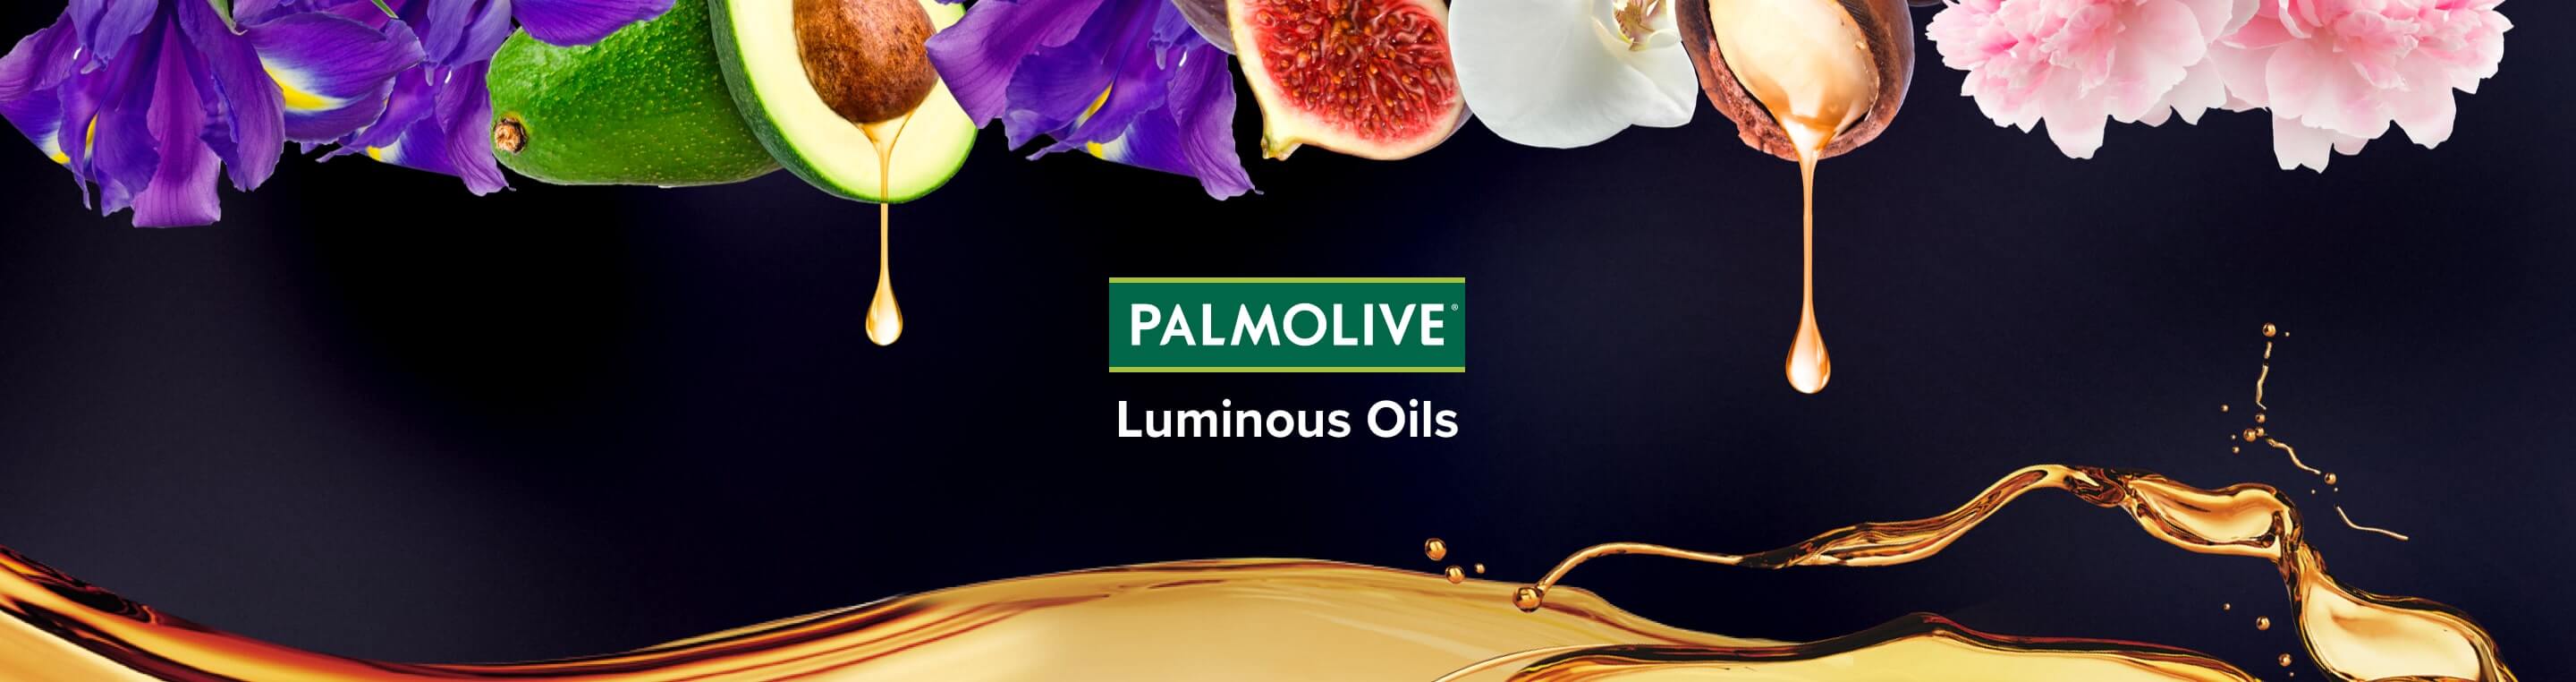 Palmolive luminous oils